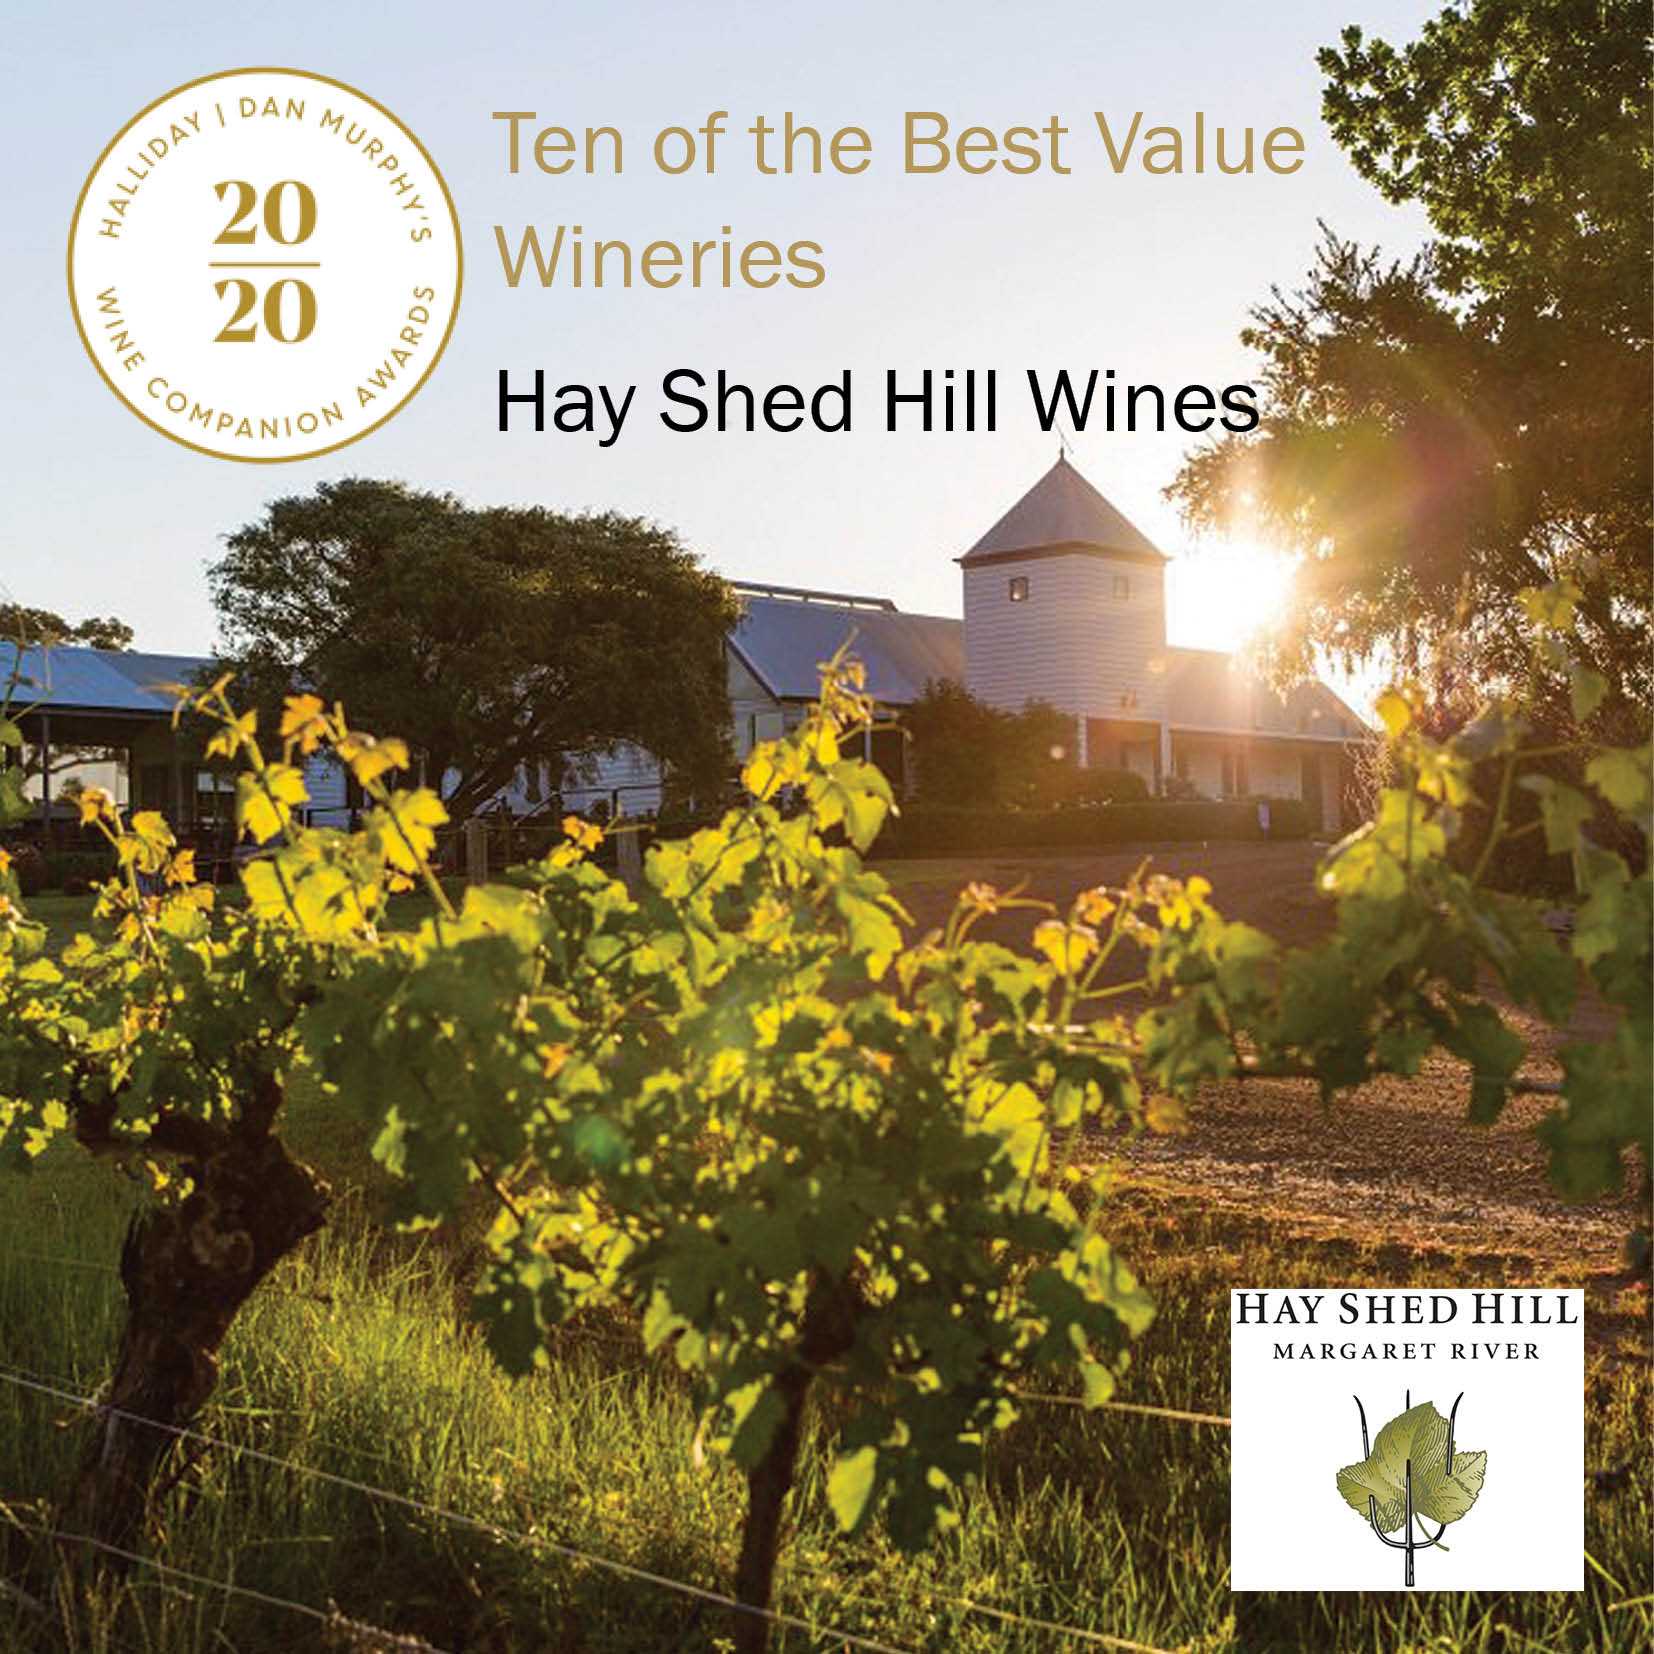 Halliday Wine Companion 2020 Results